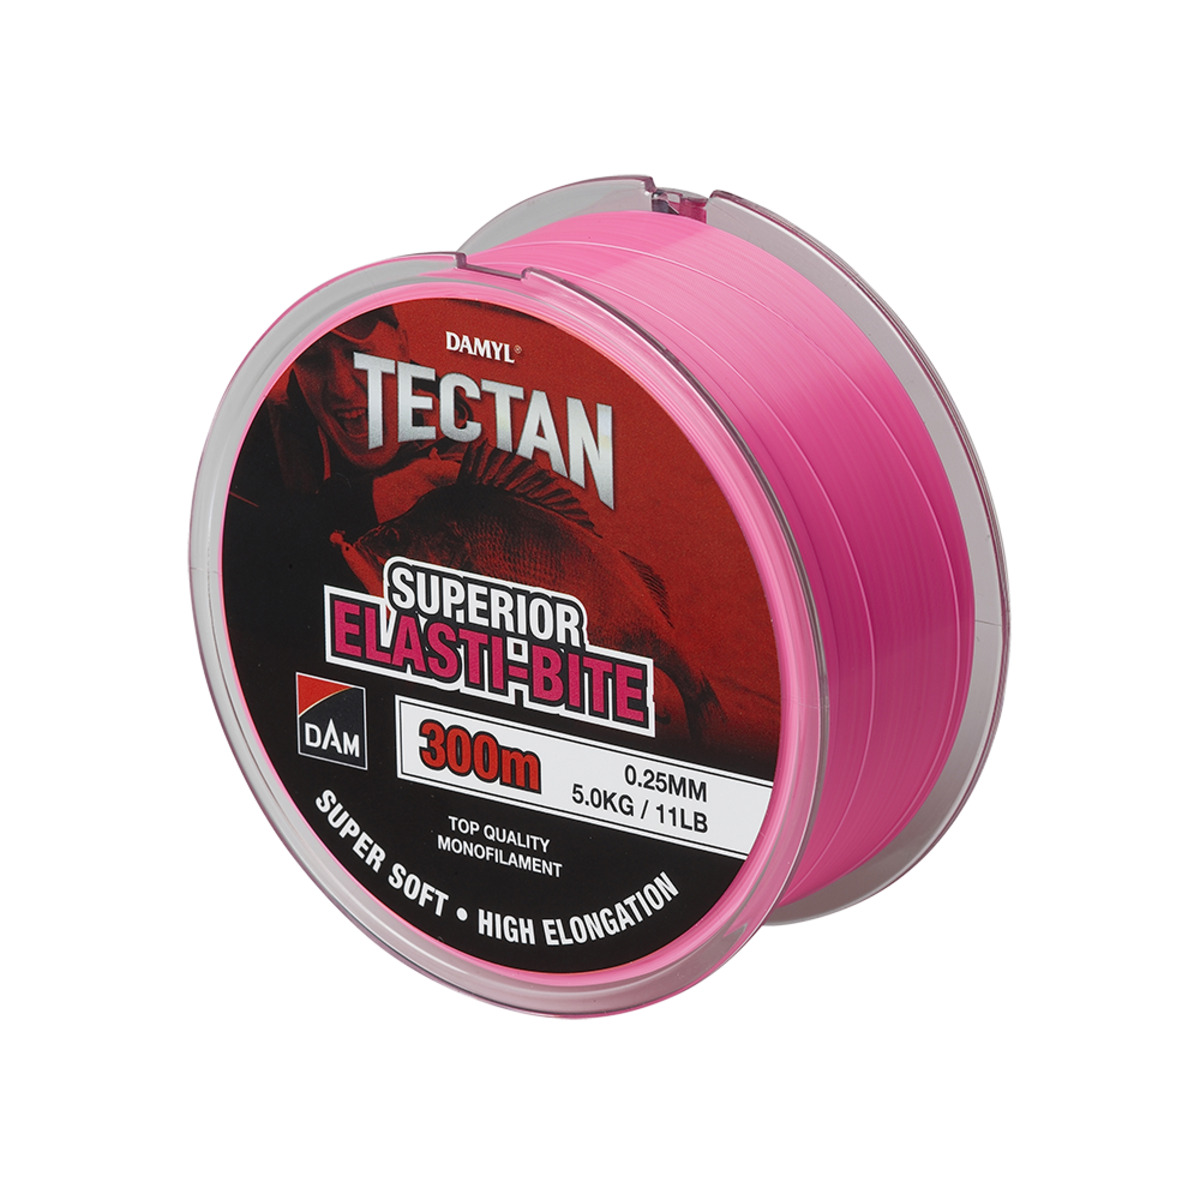 Dam Tectan Superior Elasti-bite 300m - 0.22MM 4KG 9LBS PINK